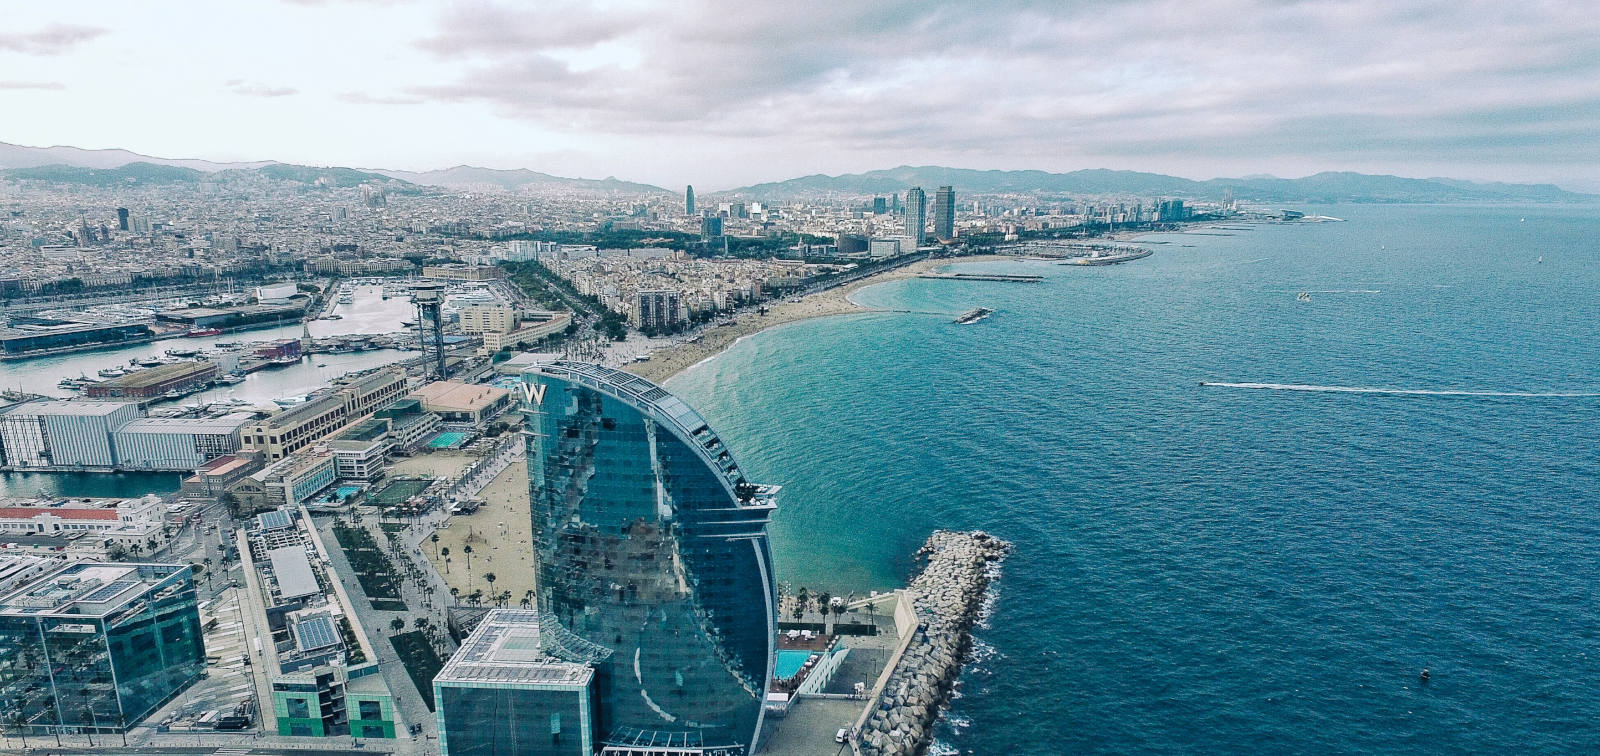 Aerial view of Barcelona by Benjamin Gremler on Unsplash